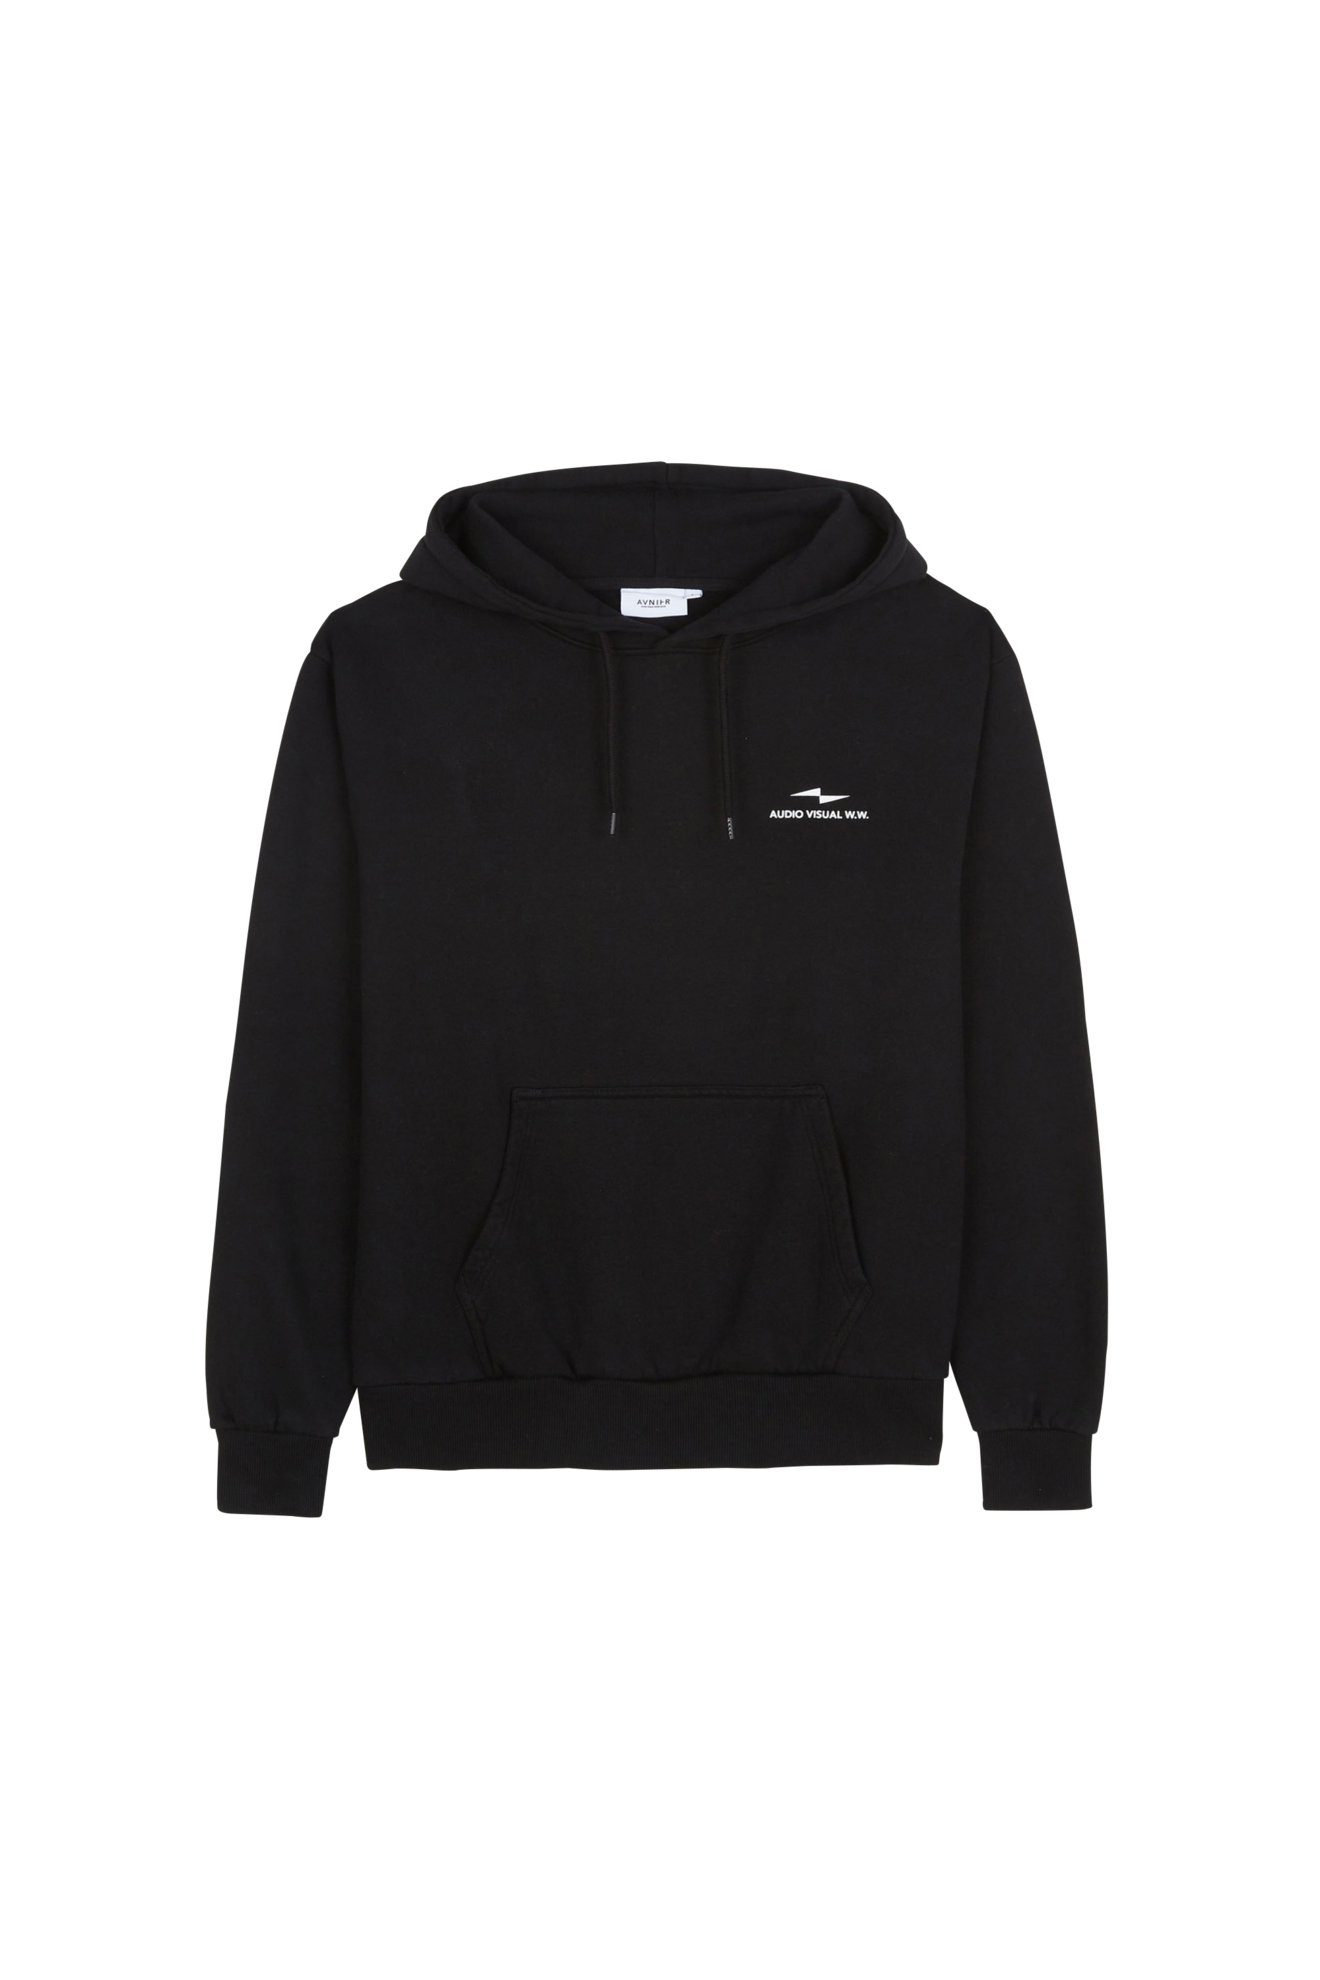 Hoodie Onset Black Vertical V3 - hoodie offre à 60€ sur Citadium